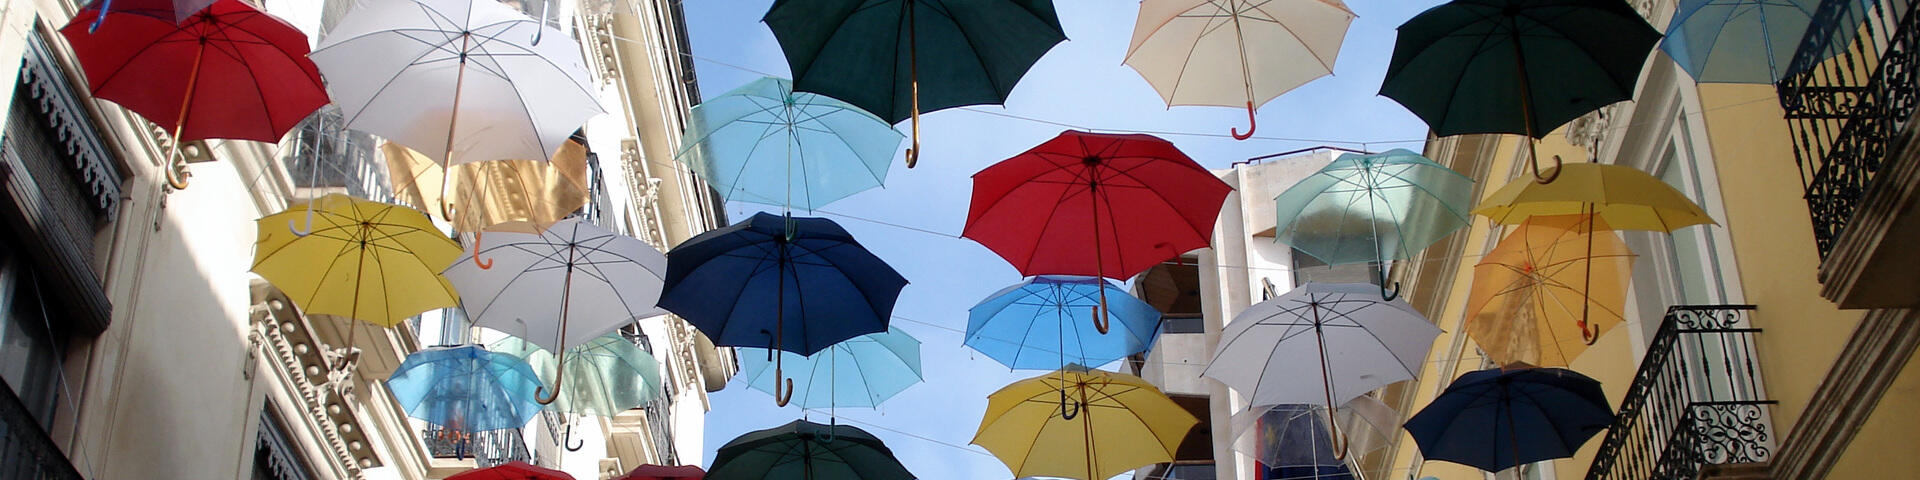 Regenschirme in der Straße, Alicante